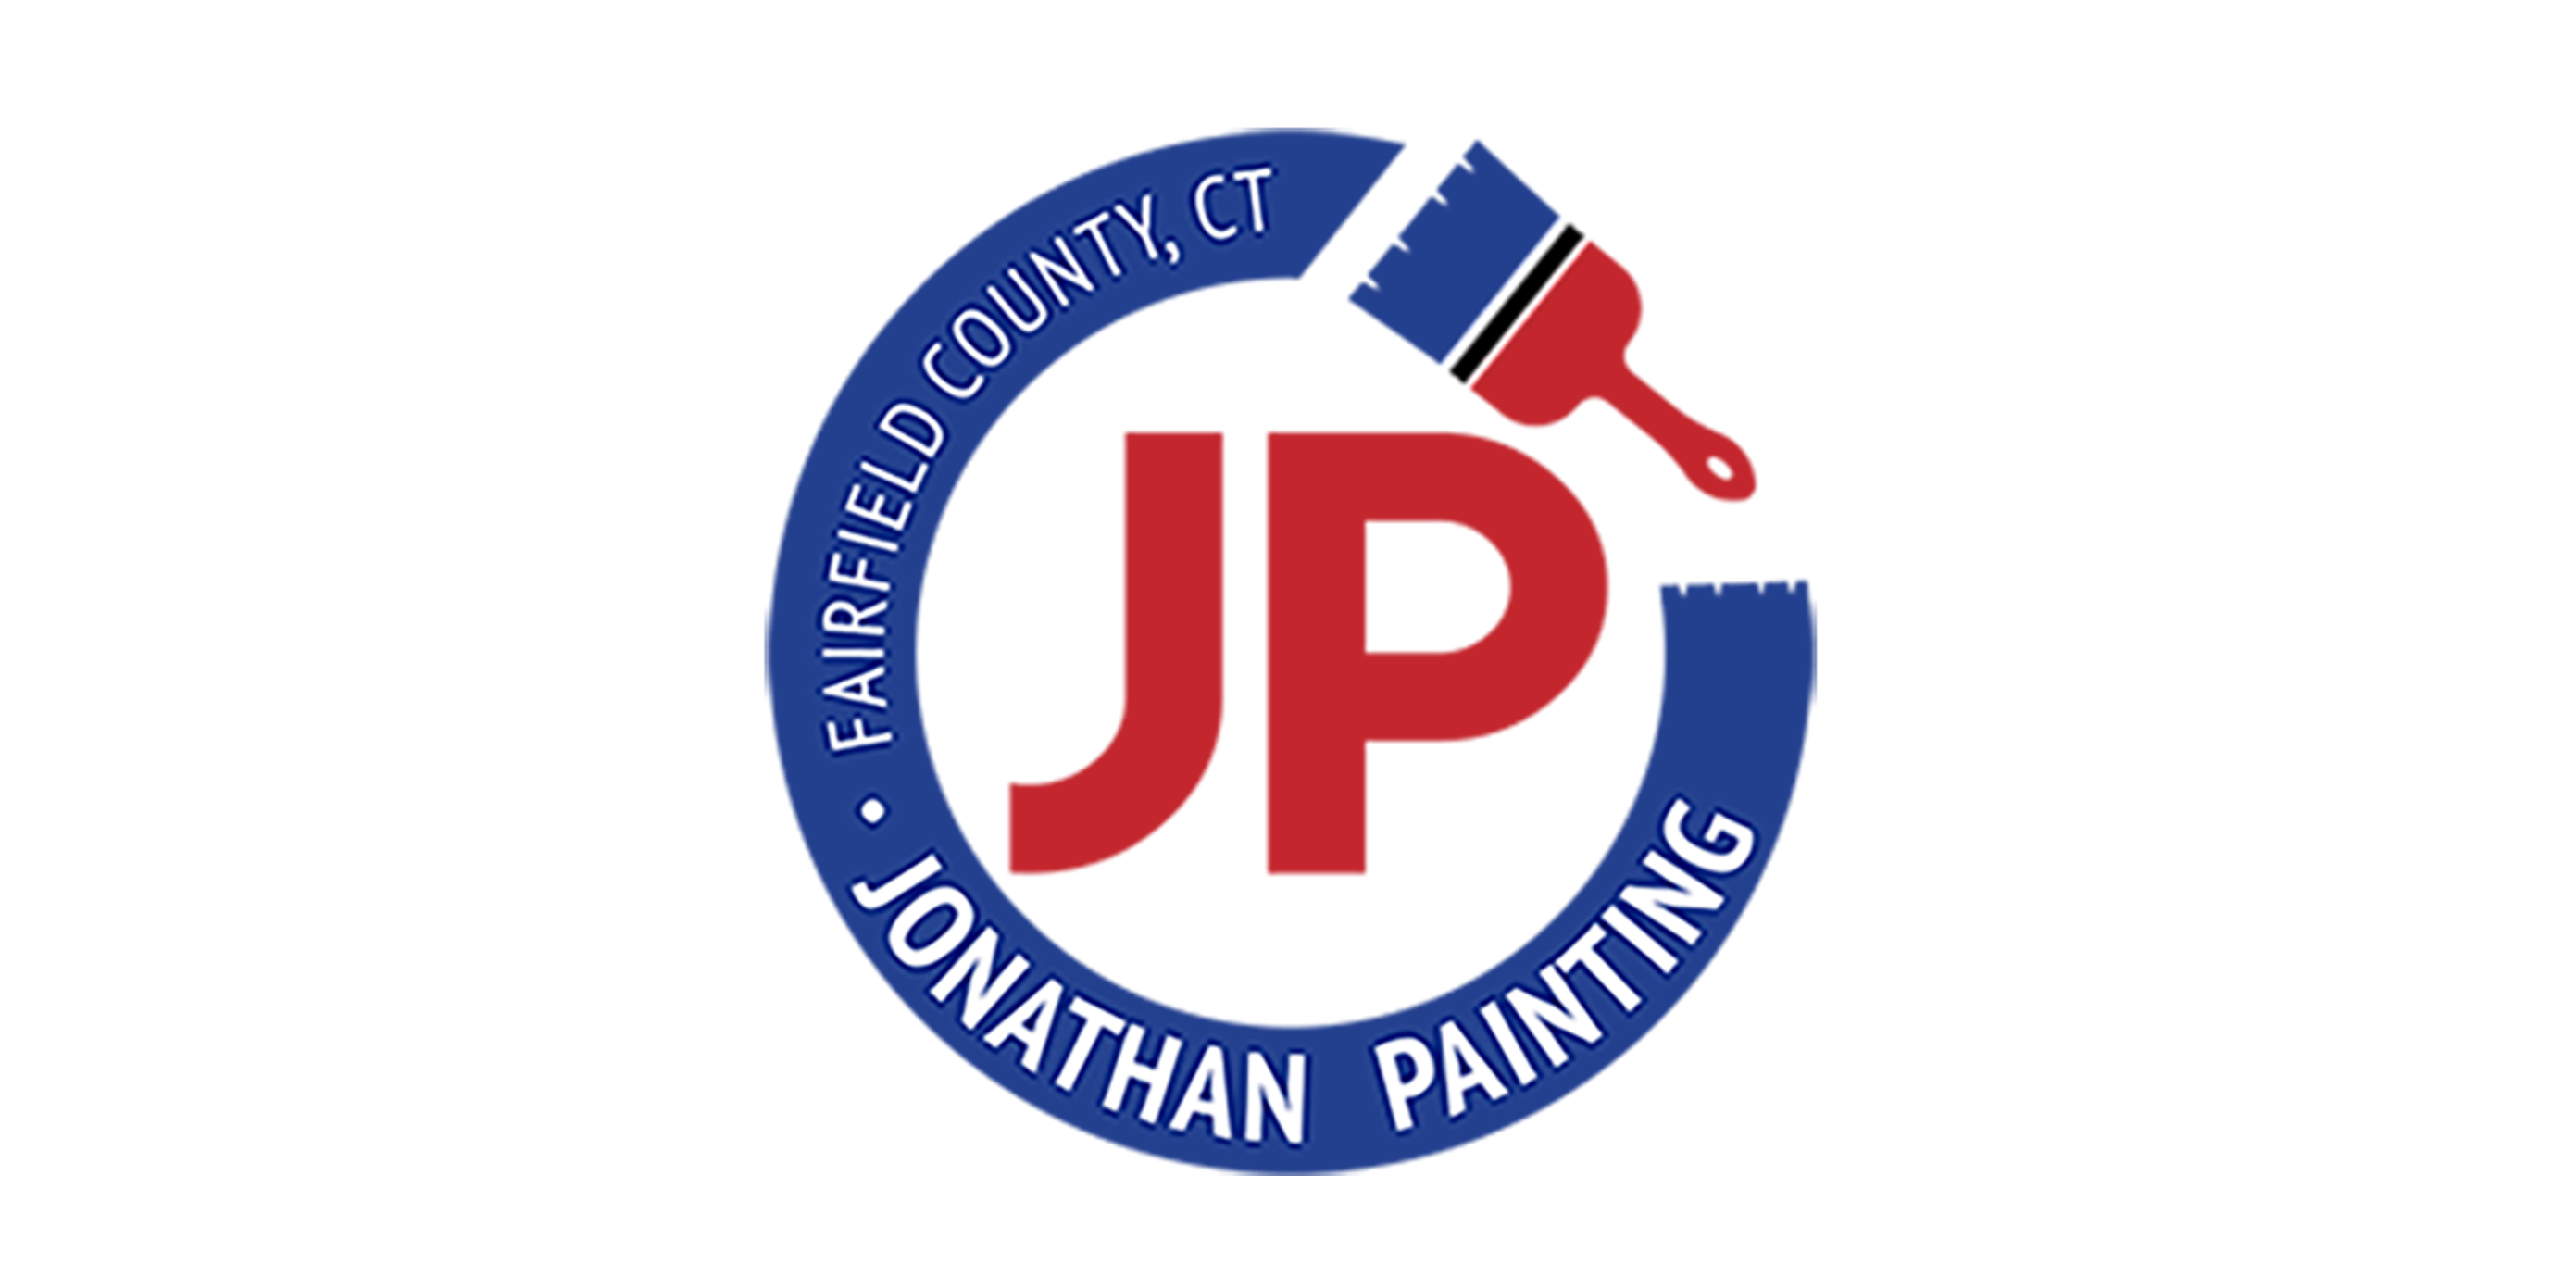 Jonathan Painting Service